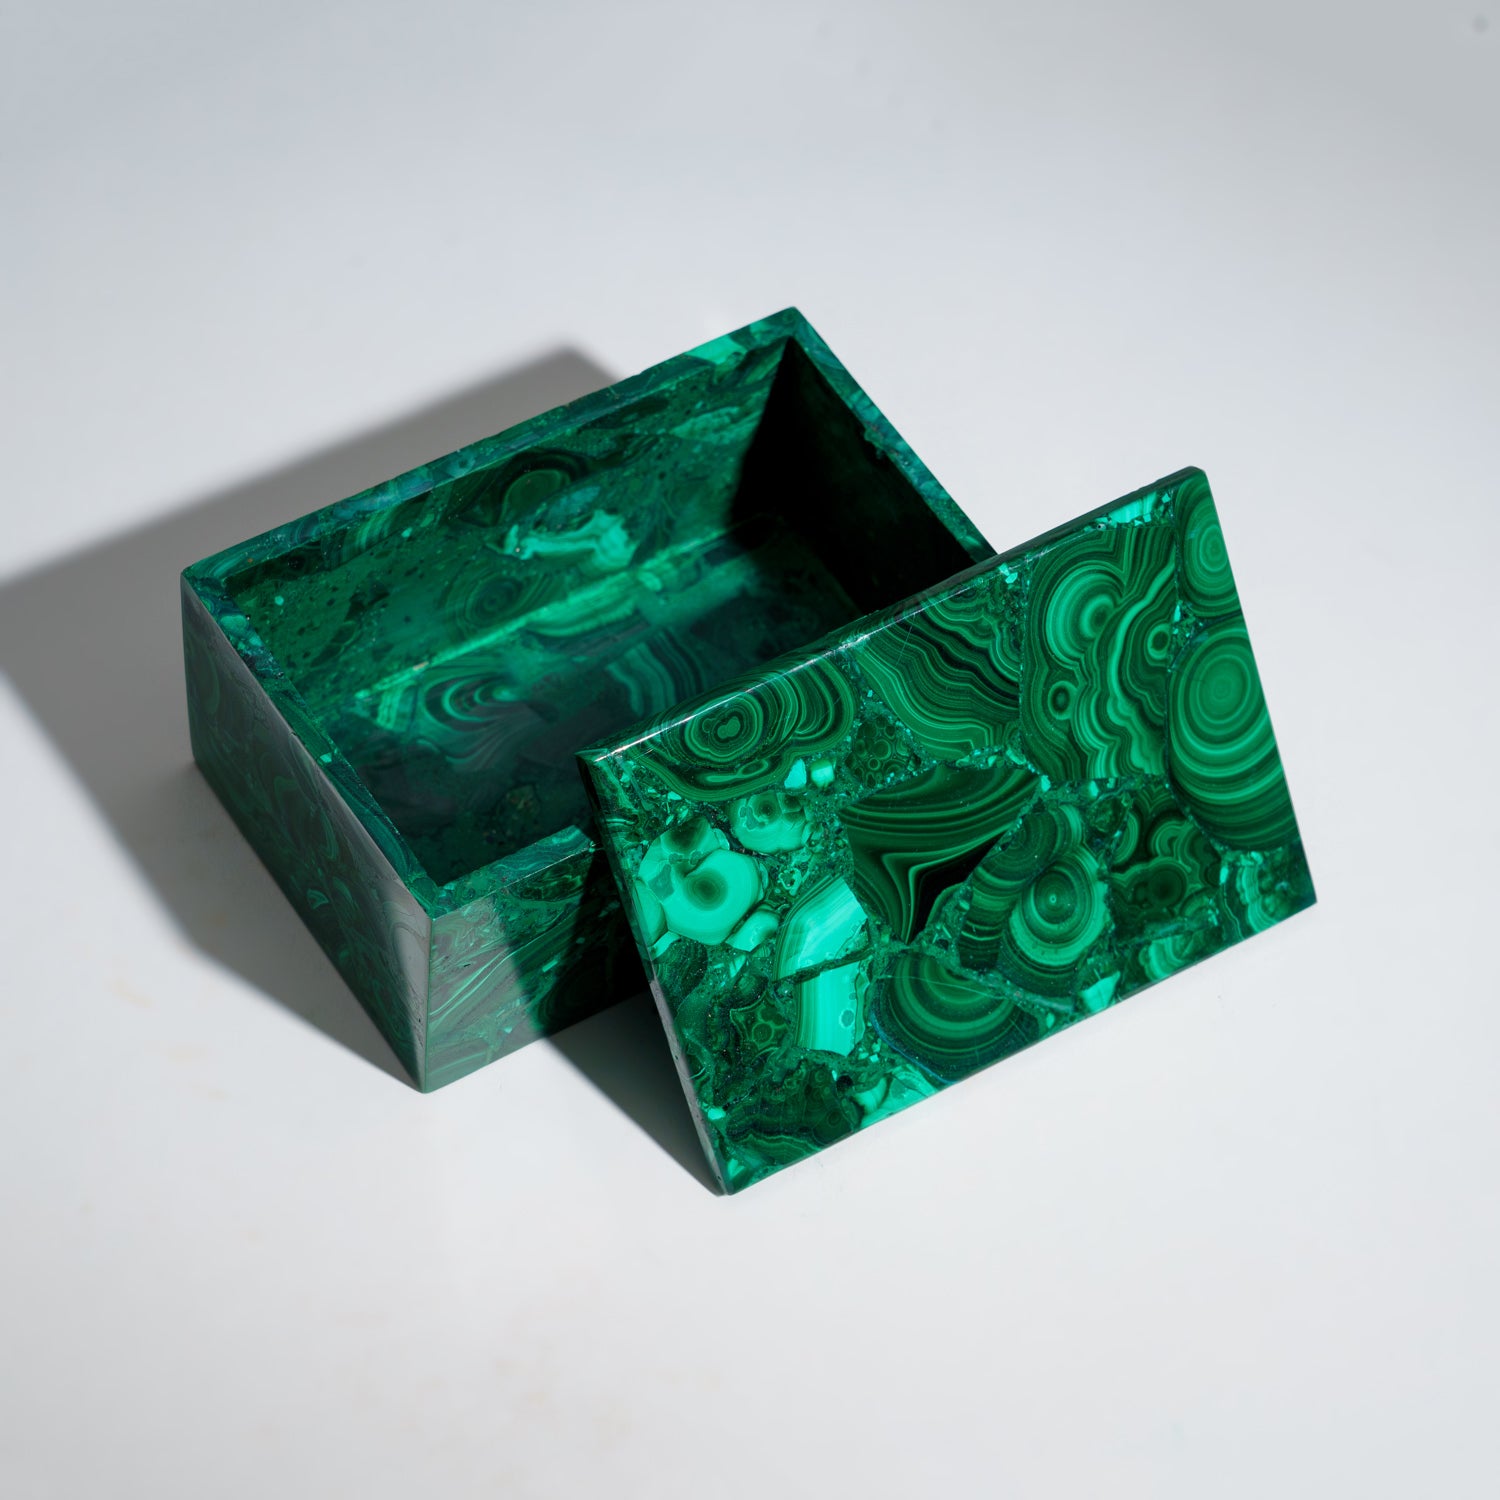 Genuine Malachite Jewelry Box (1.6 lbs)